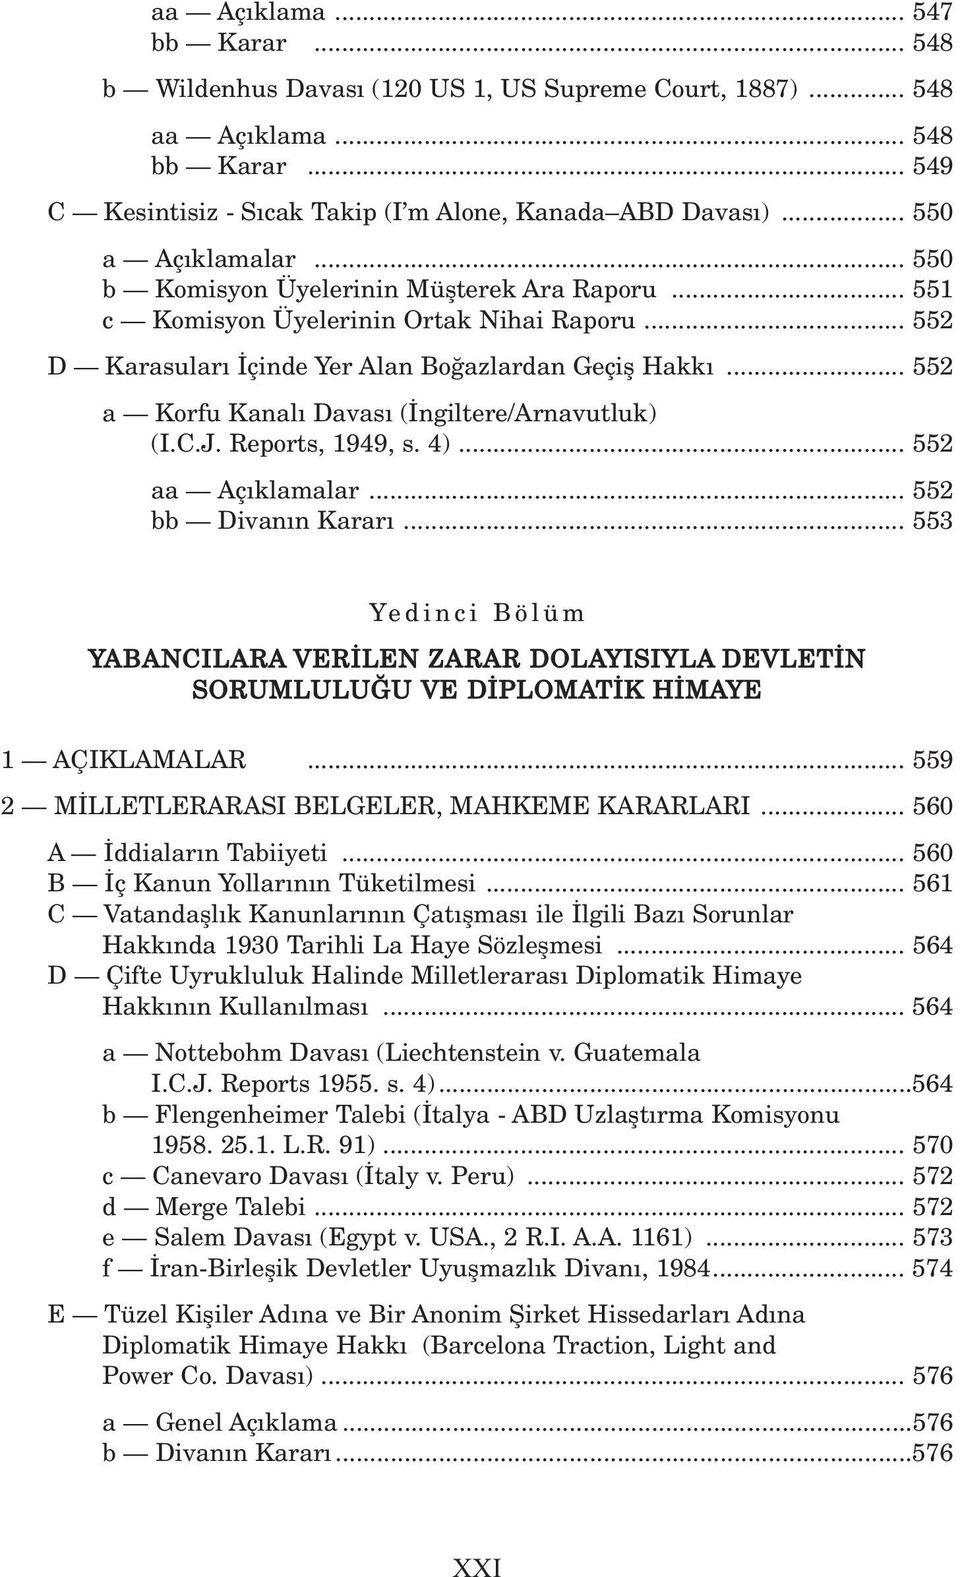 .. 552 a Korfu Kanal Davas ( ngiltere/arnavutluk) (I.C.J. Reports, 1949, s. 4)... 552 aa Aç klamalar... 552 bb Divan n Karar.